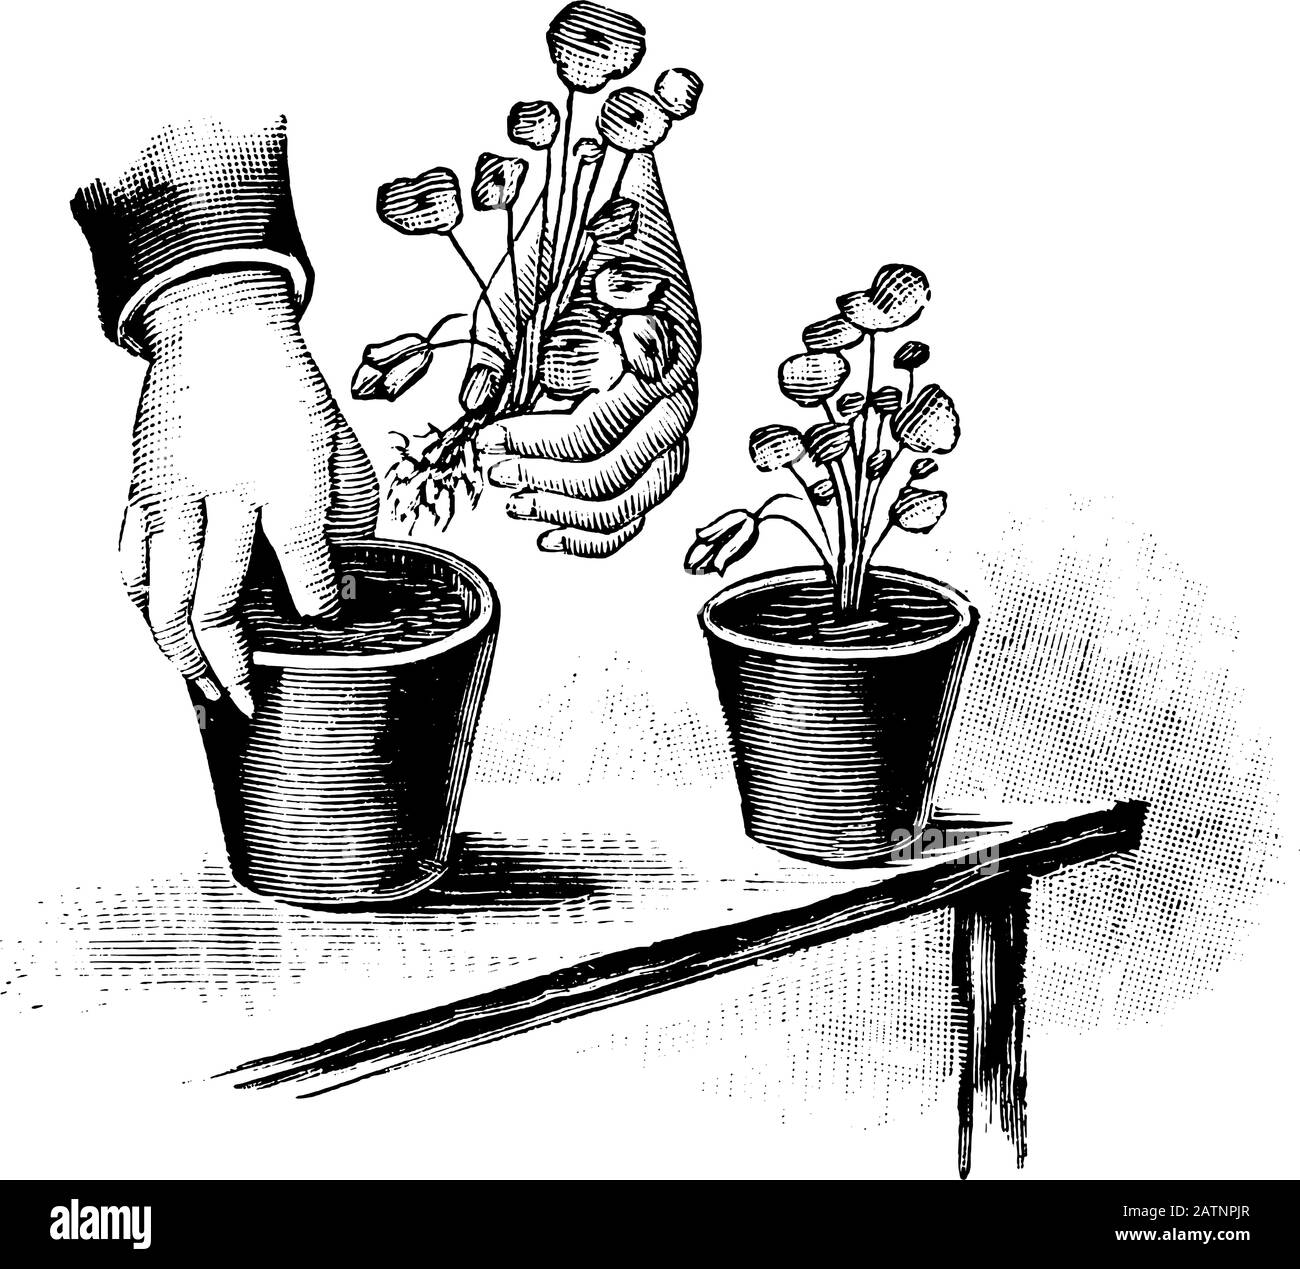 Antique vintage line art illustration, engraving or drawing of planting of grown plan seedlings in flower pot . From book Plants in Room, Prague, 1898. Stock Vector